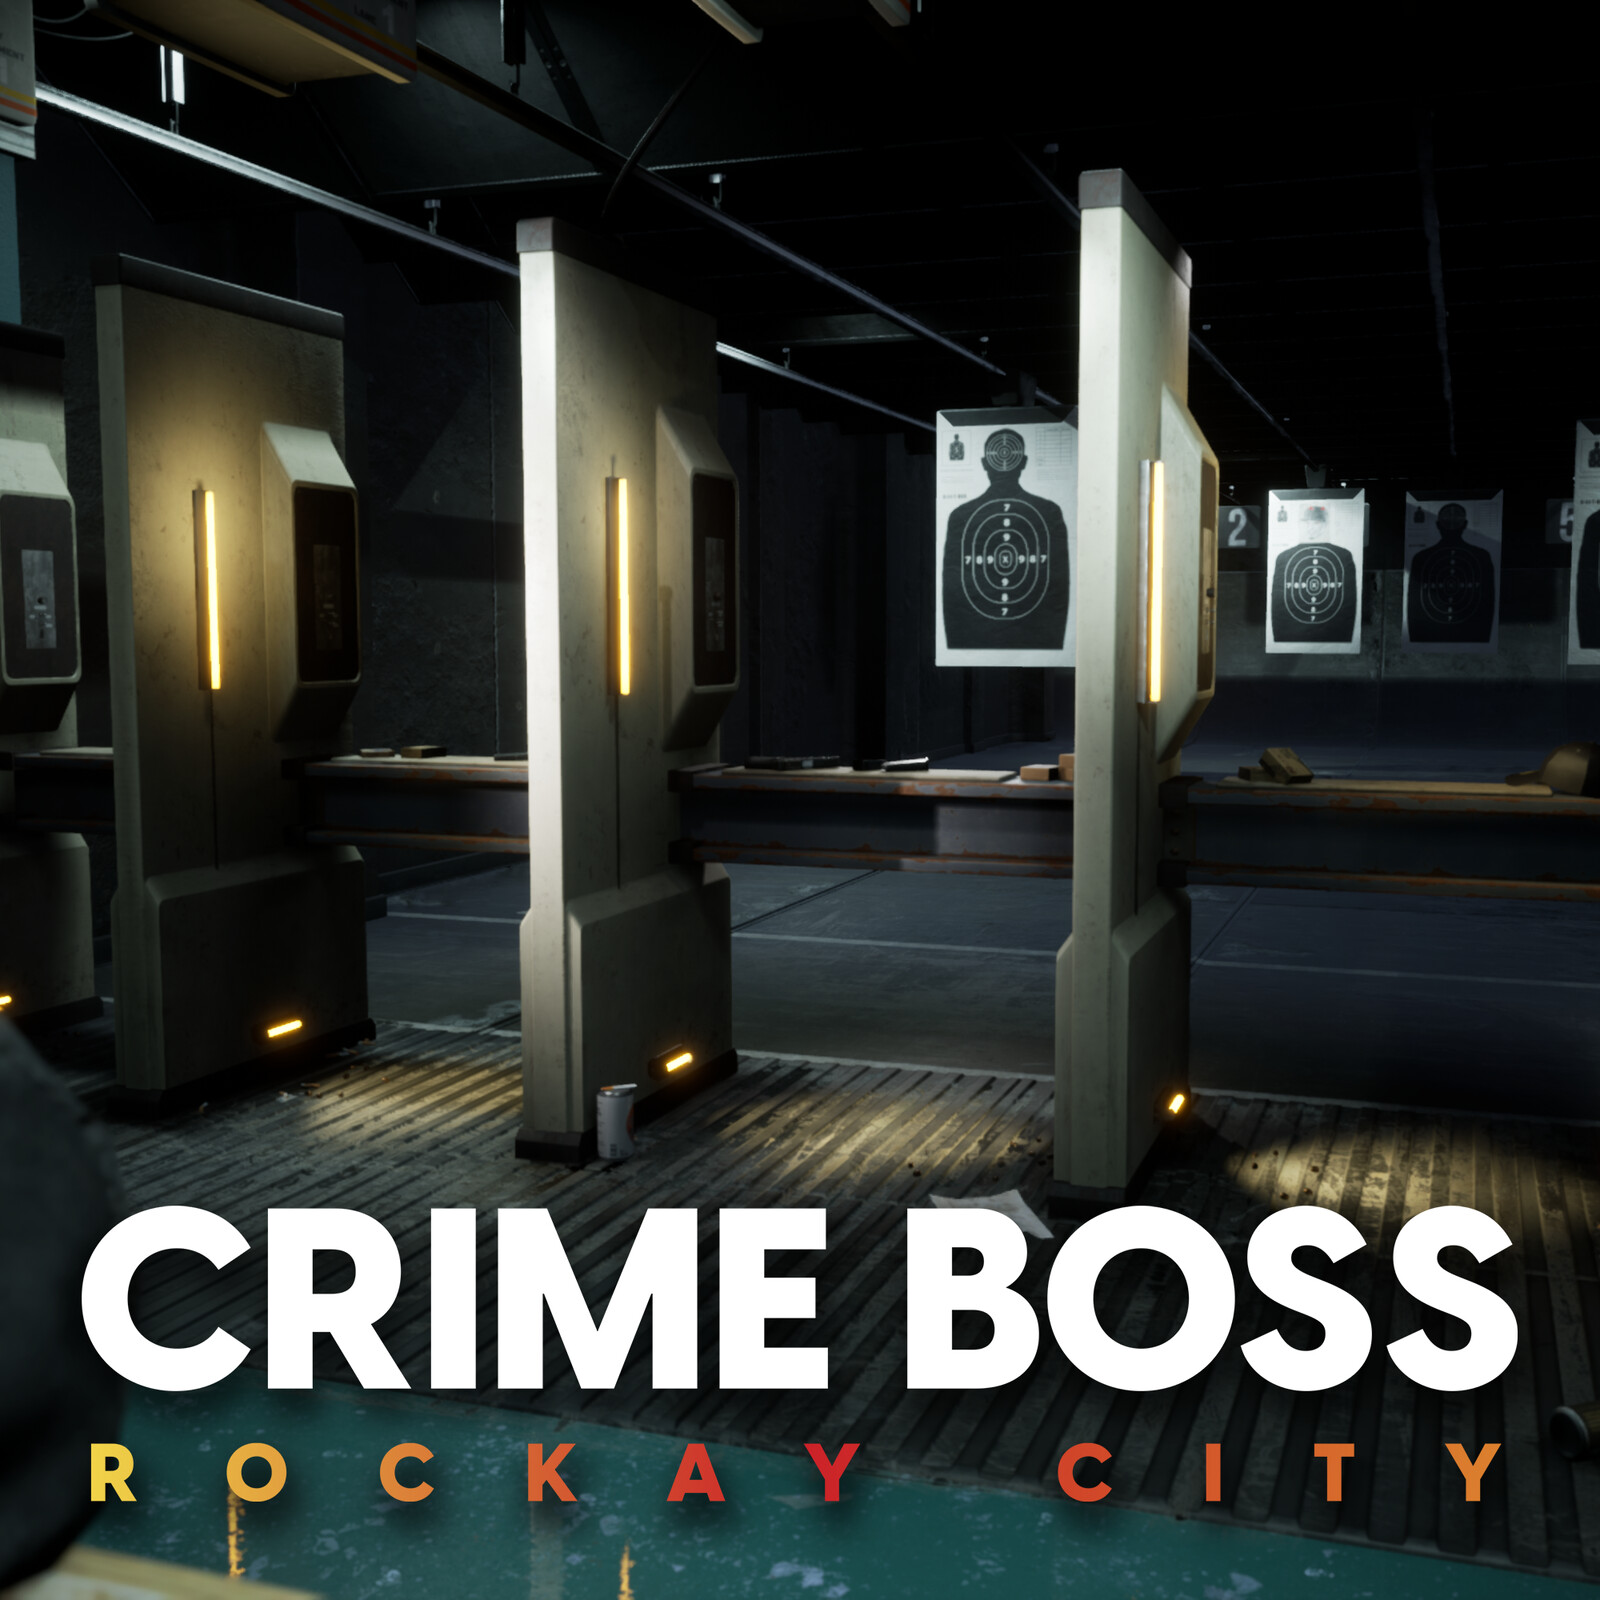 Crime Boss: Rockay City - Environment Art - Shooting Range 